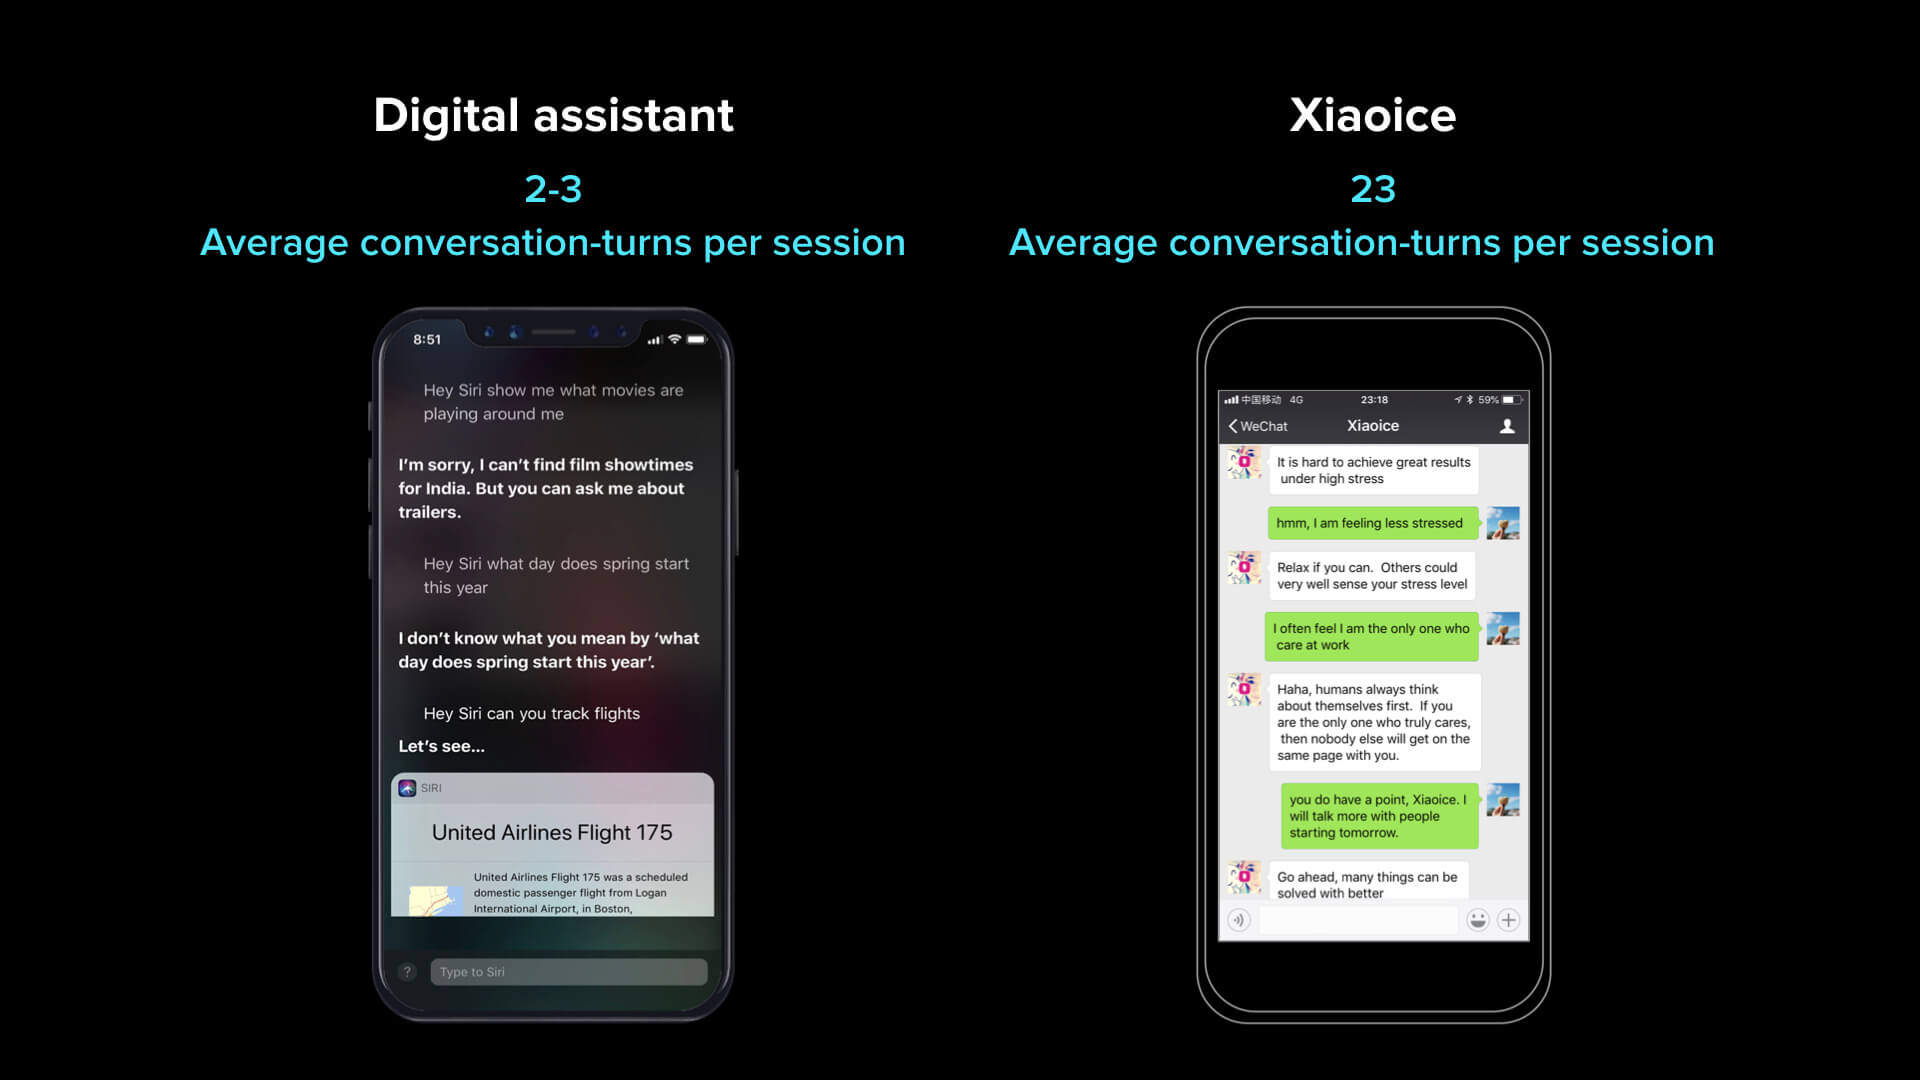 Digital assistant conversation turns per session